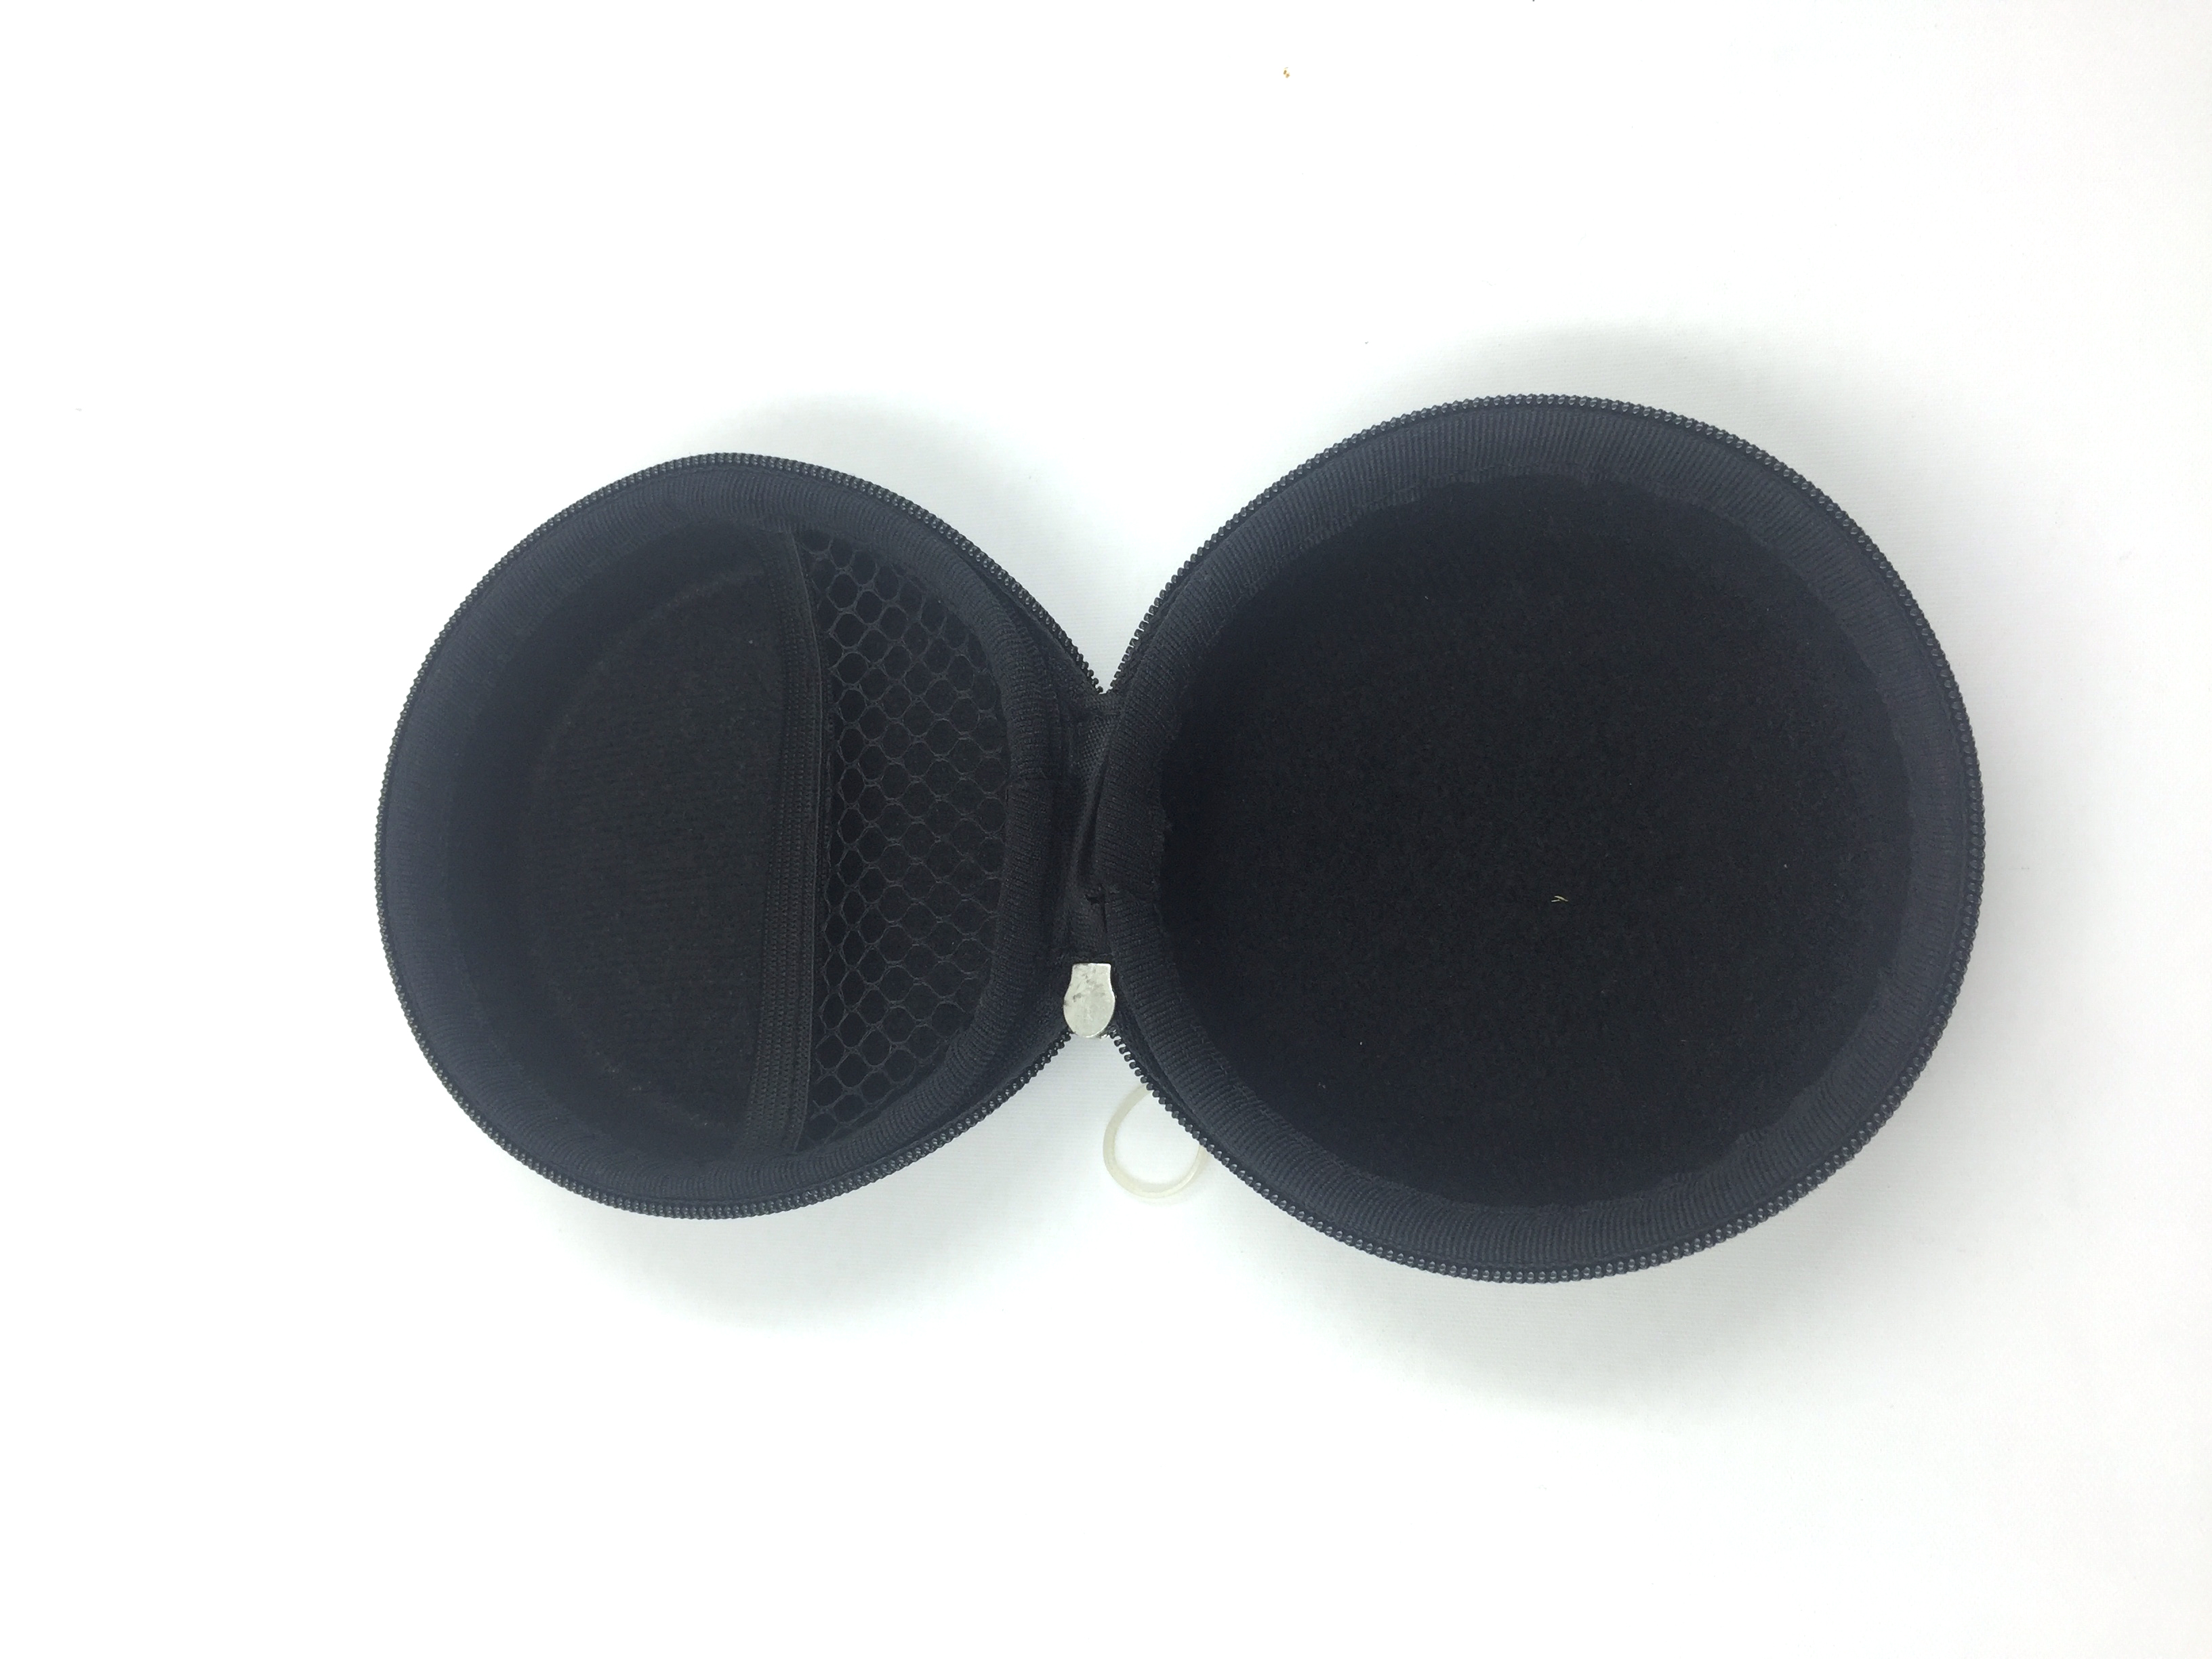 New round EVA earphones Hard shell case